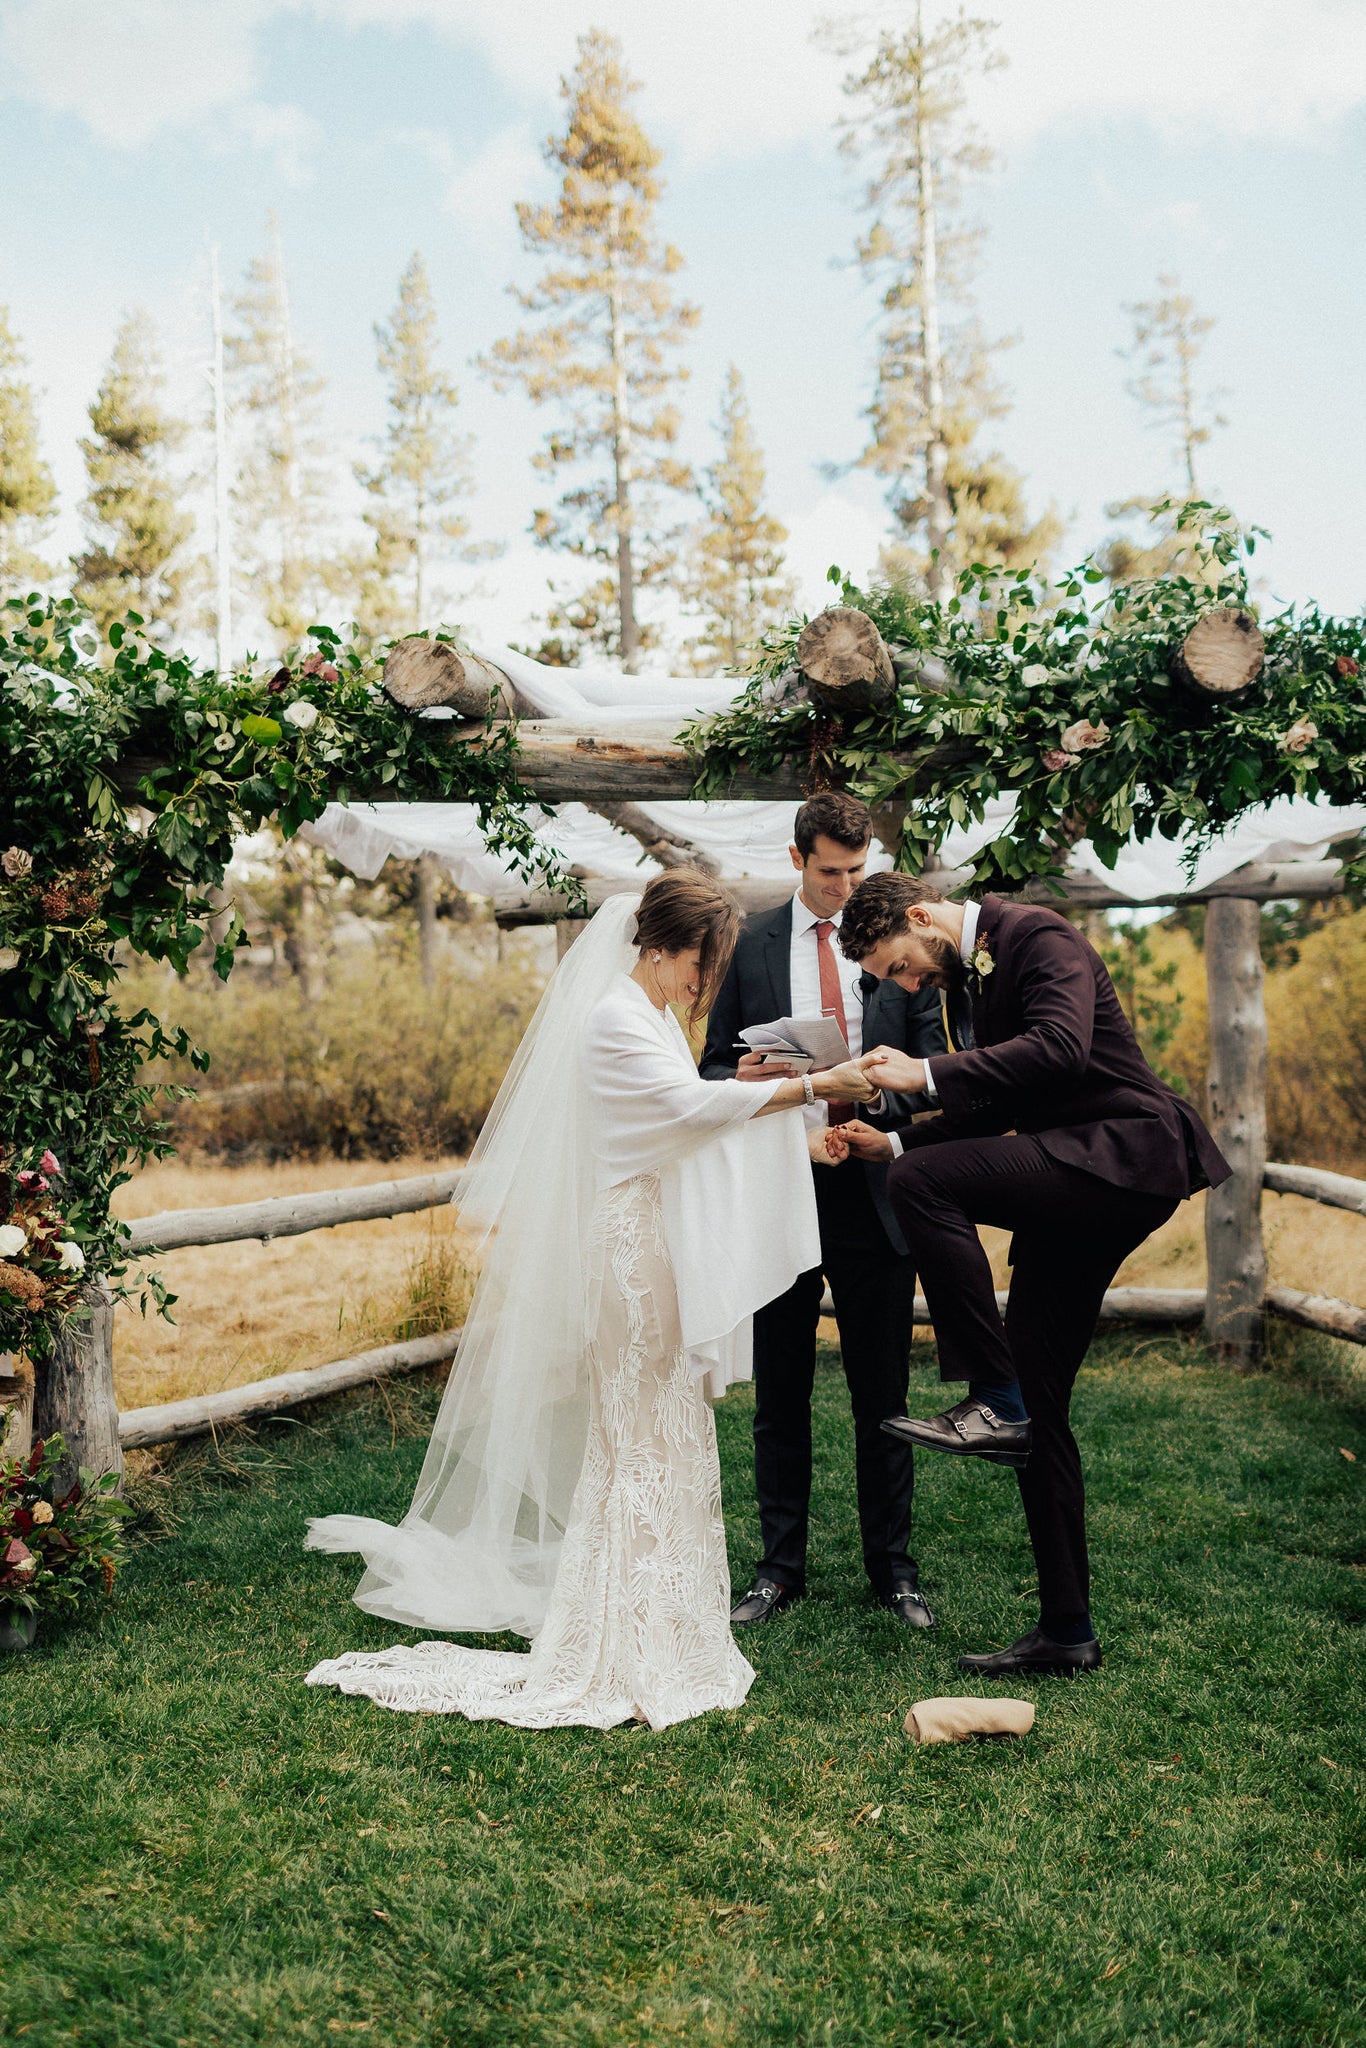 Kathleen & Carter's Rustic Autumnal Forrest Wedding in Kirkwood, California | Smashing the Glass | Tallulah Ketubahs